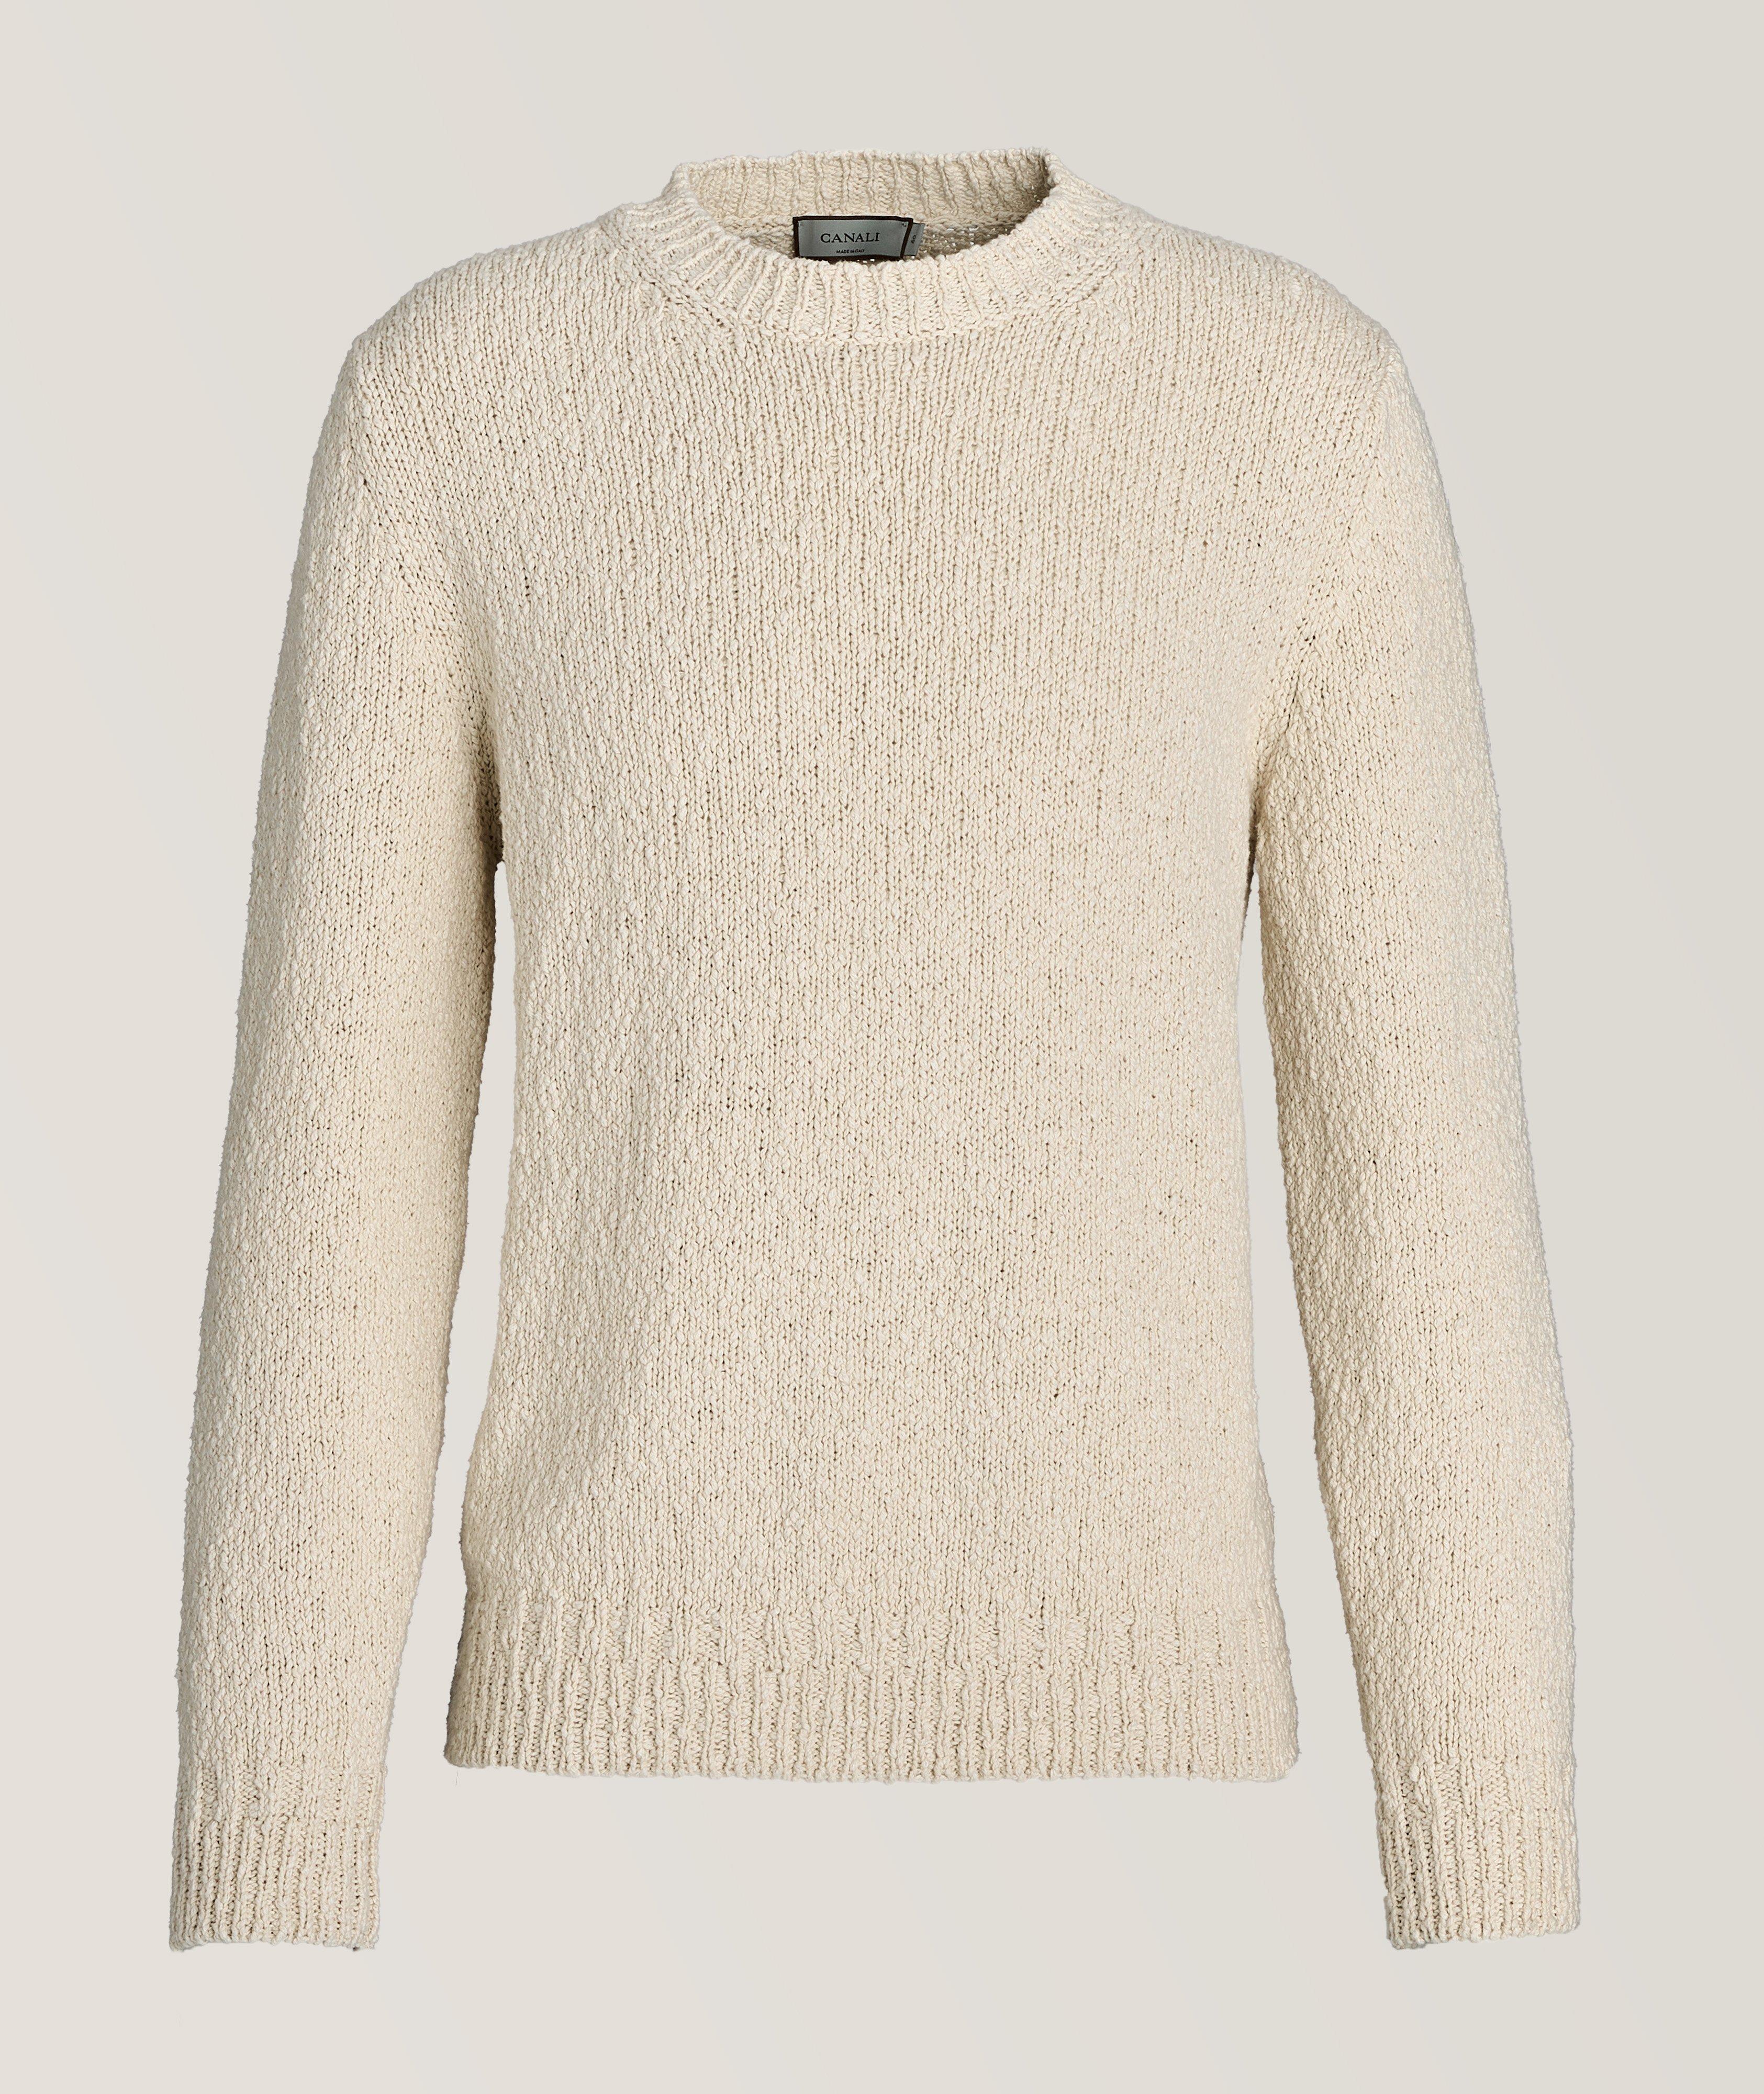 Textured Cotton Sweater image 0